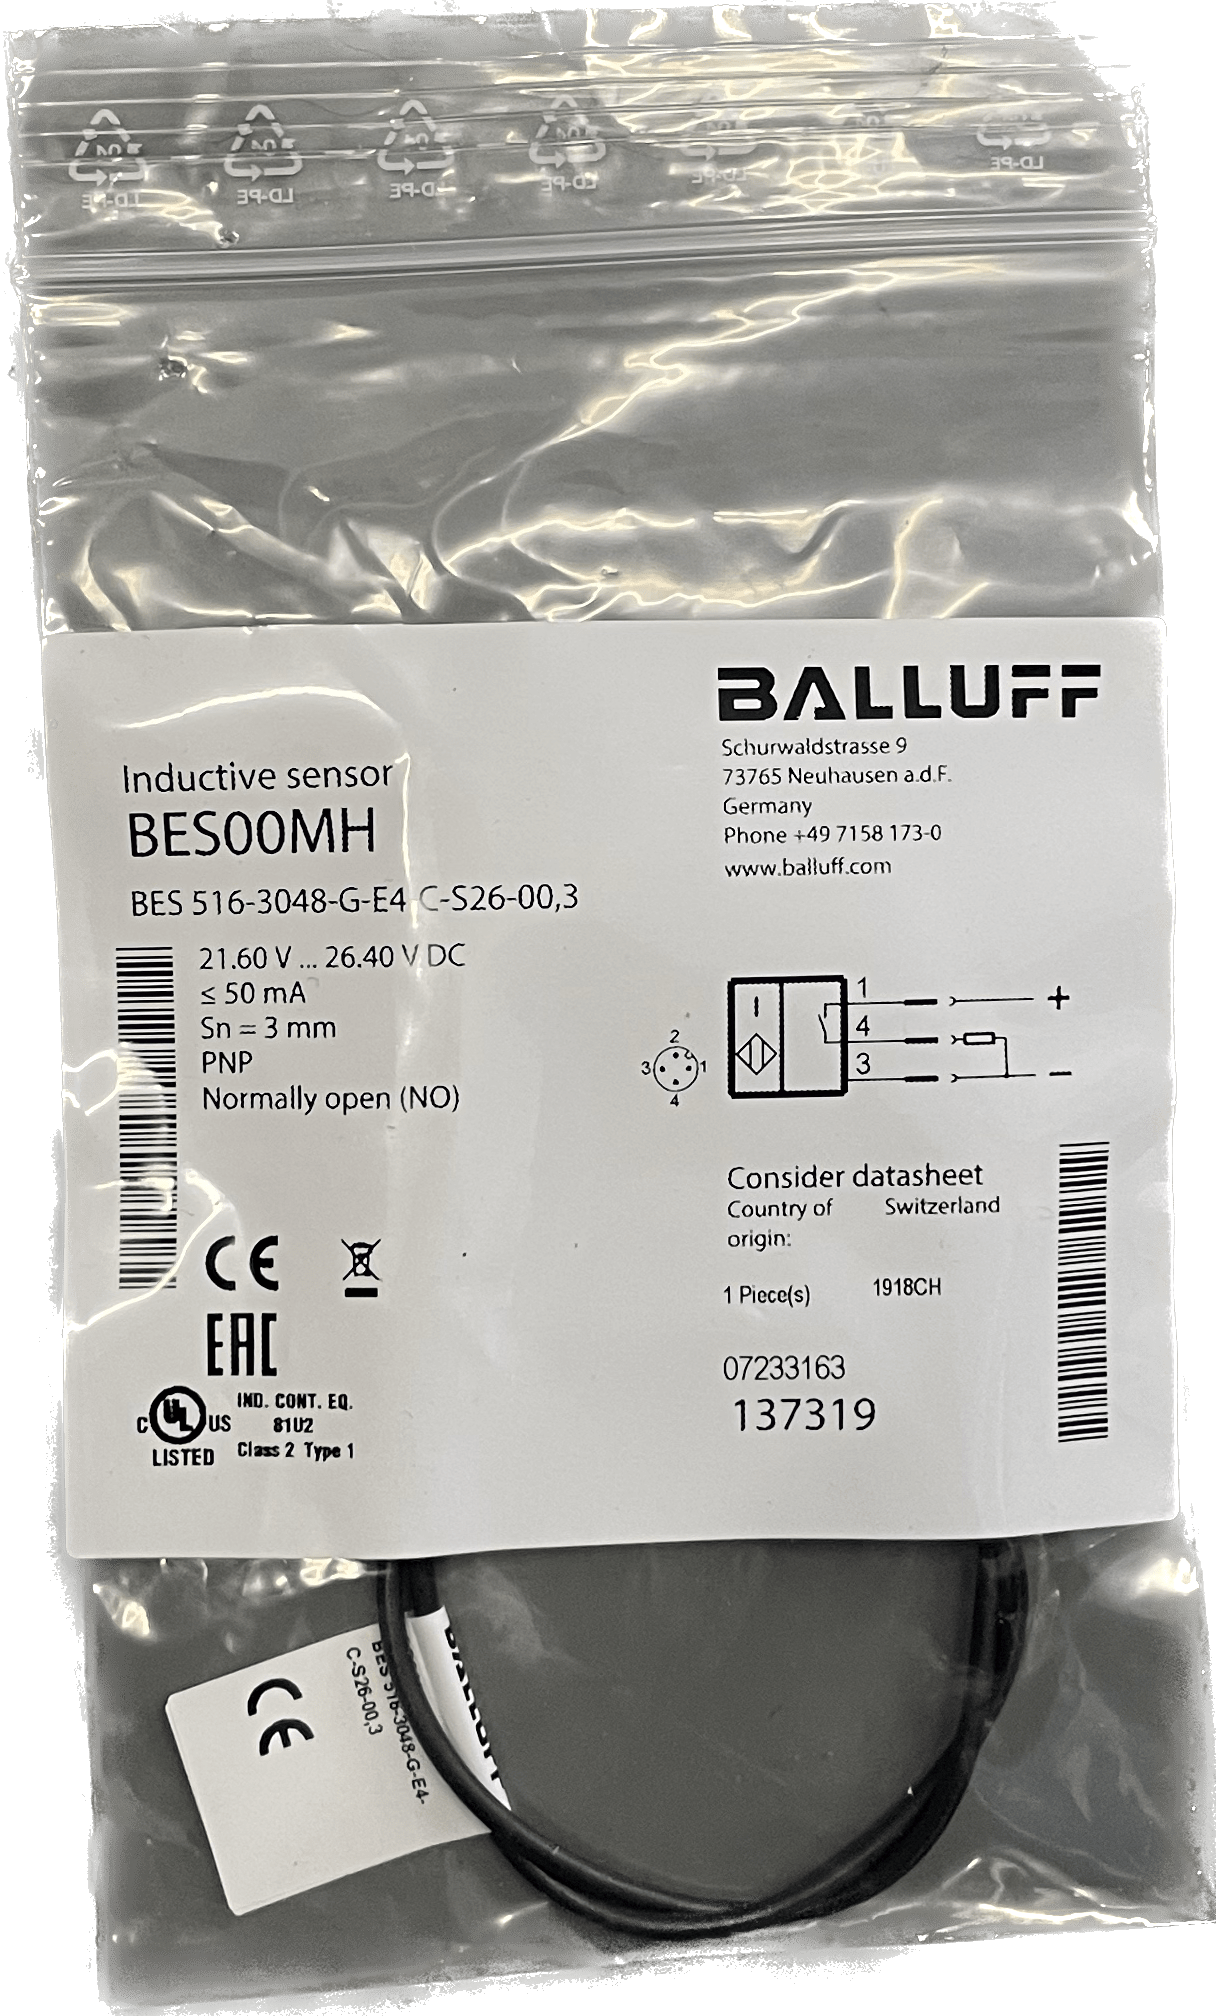 BALLUFF Induktive Standardsensoren mit Vorzugstypen BES 516-3048-G-E4-C-S26-00,3 - #product_category# | Klenk Maschinenhandel